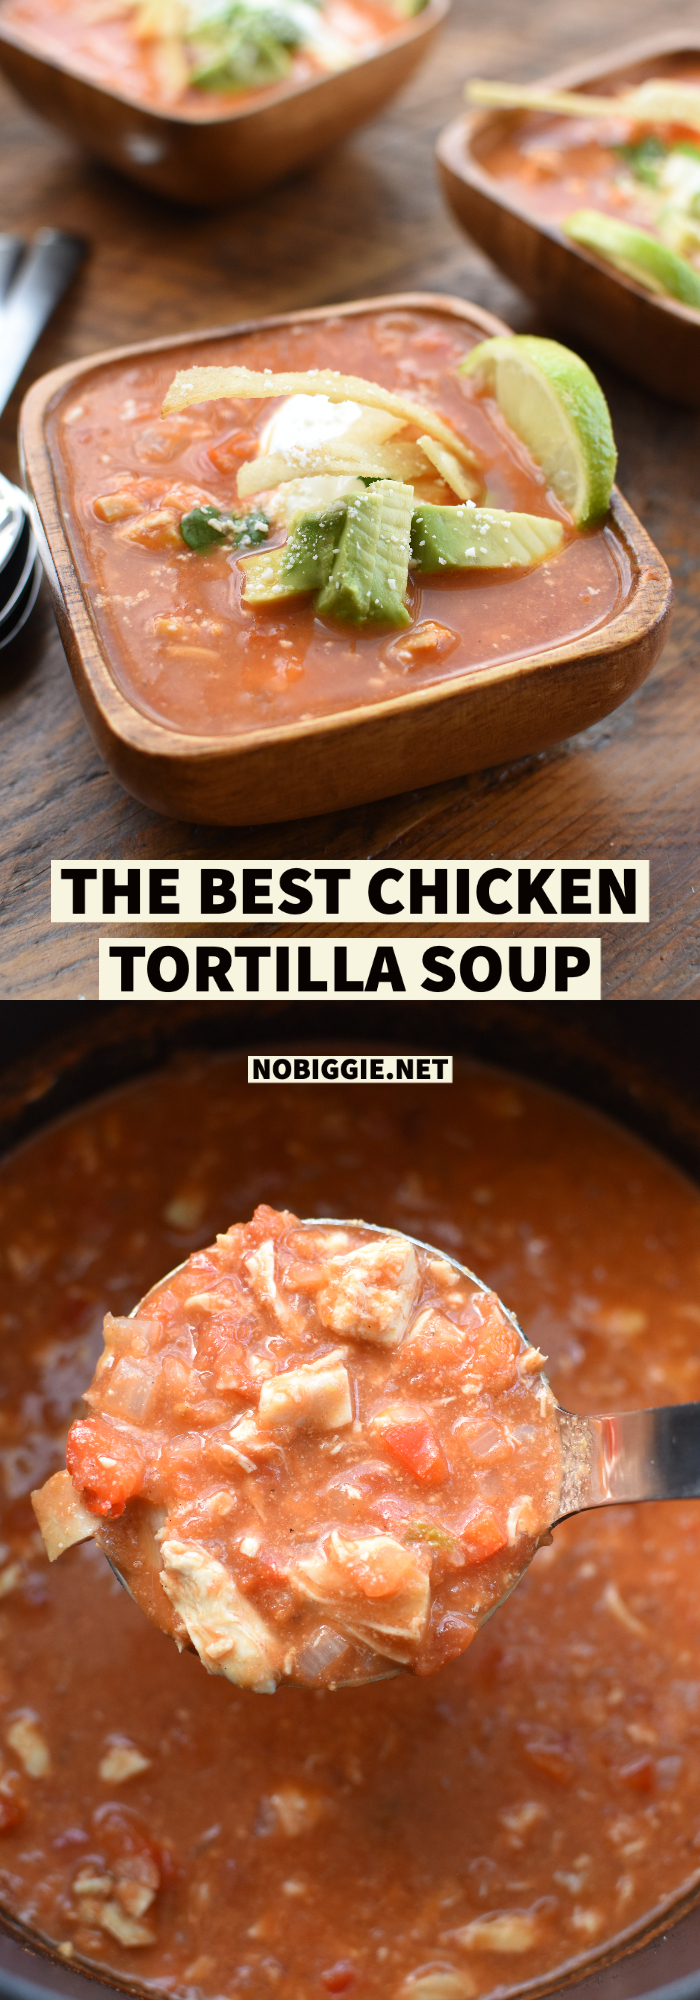 chicken tortilla soup | NoBiggie.net